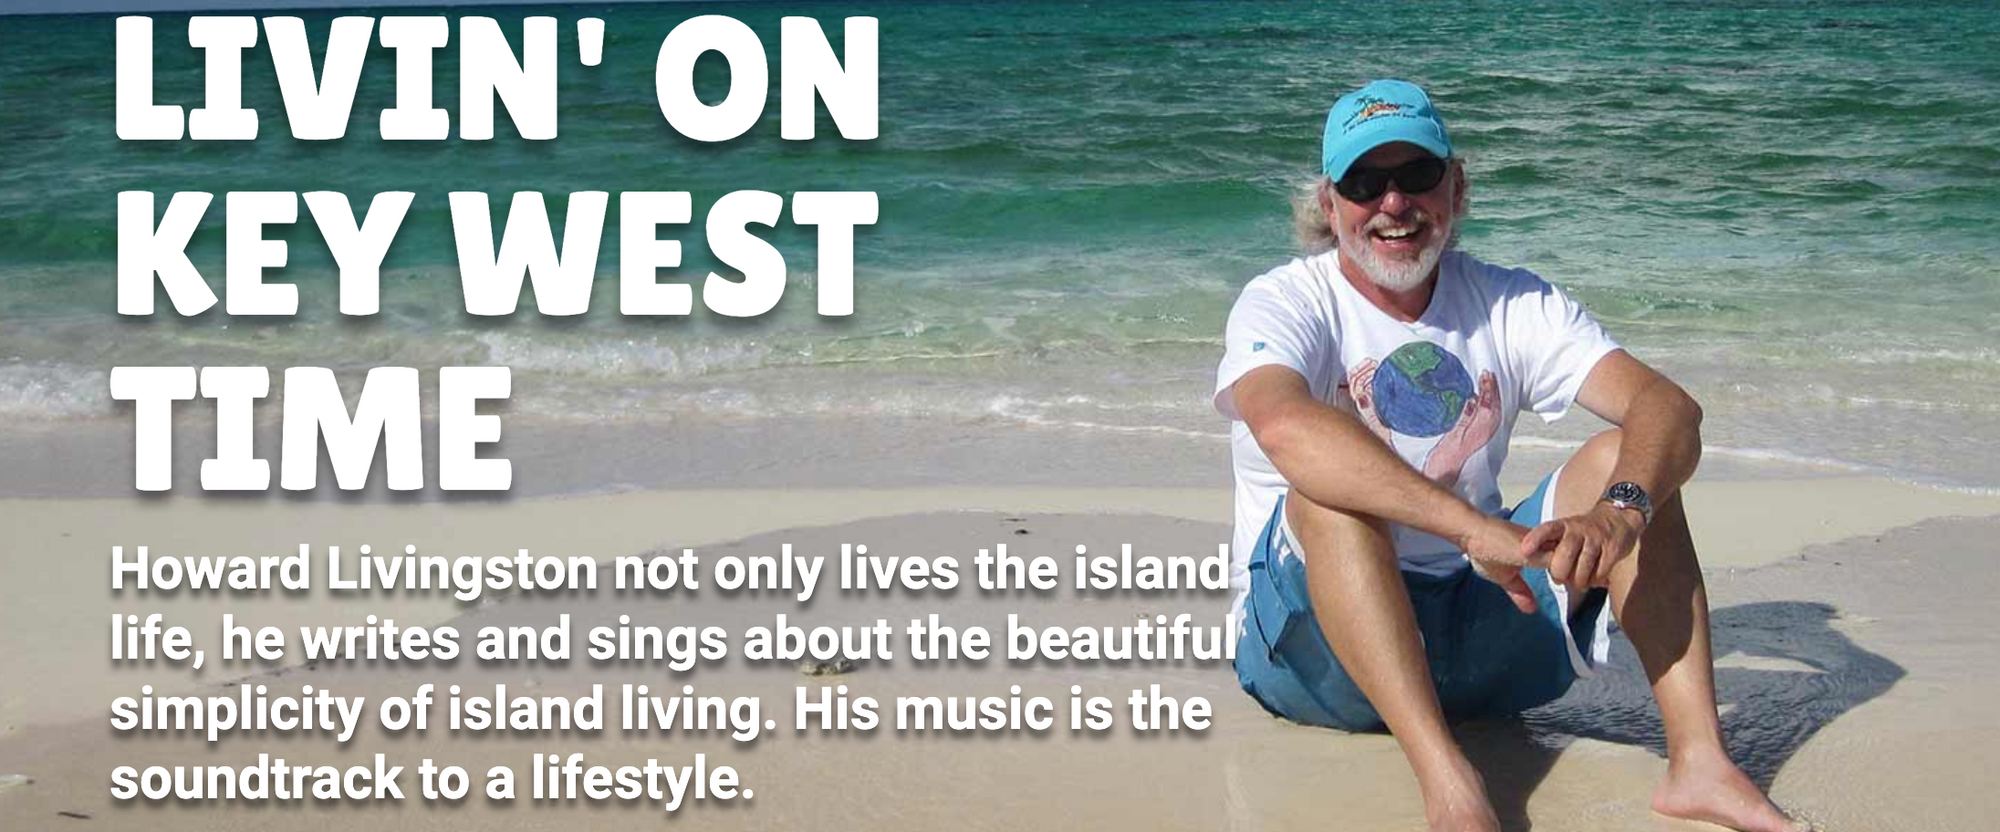 #203 - Musician Howard Livingston is "Livin' on Key West Time"